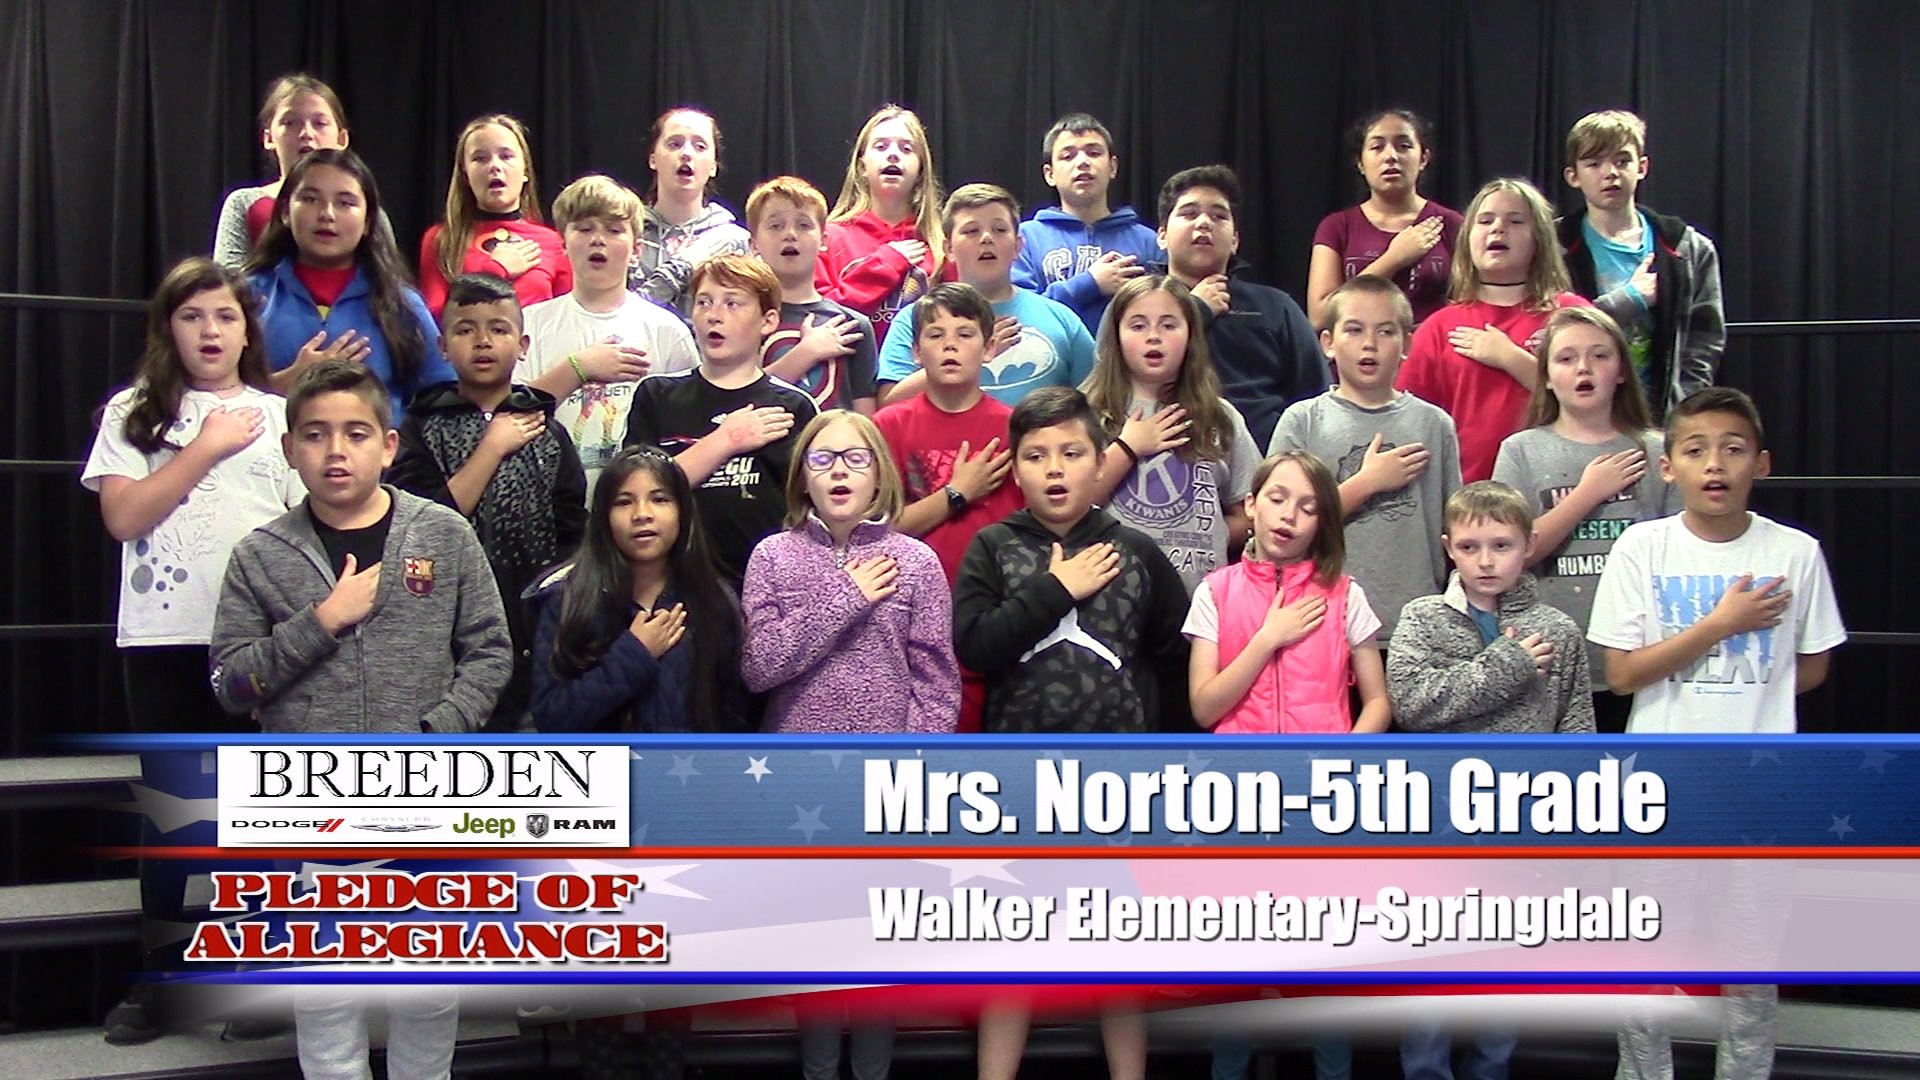 Mrs. Norton- 5th Grade Walker Elementary, Springdale